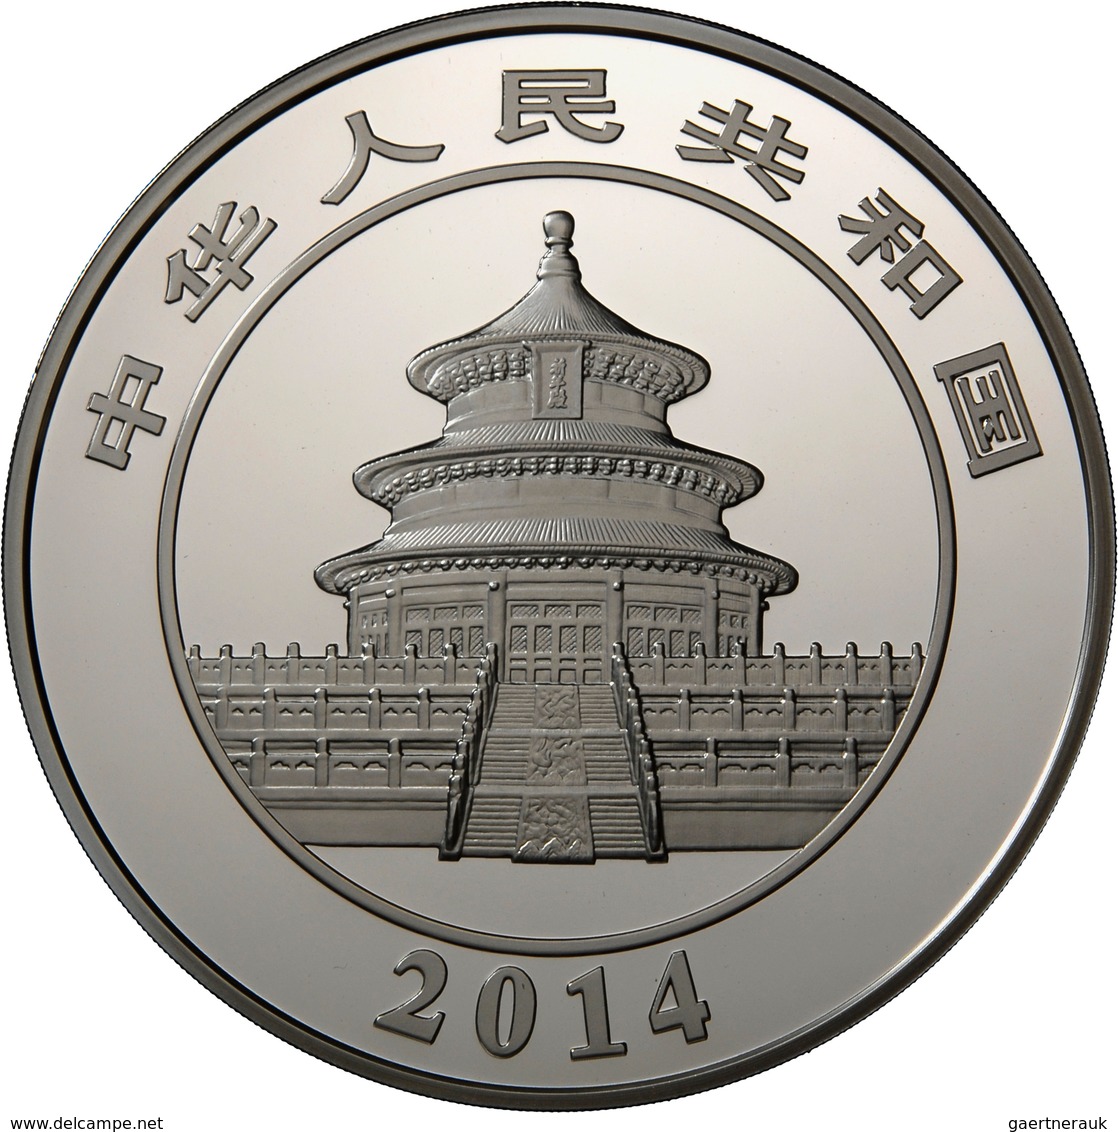 China - Volksrepublik: 300 Yuan 2014, Silber Panda, 1 Kg 999/1000 Silber. Inklusive Zertifikat, Etui - Cina